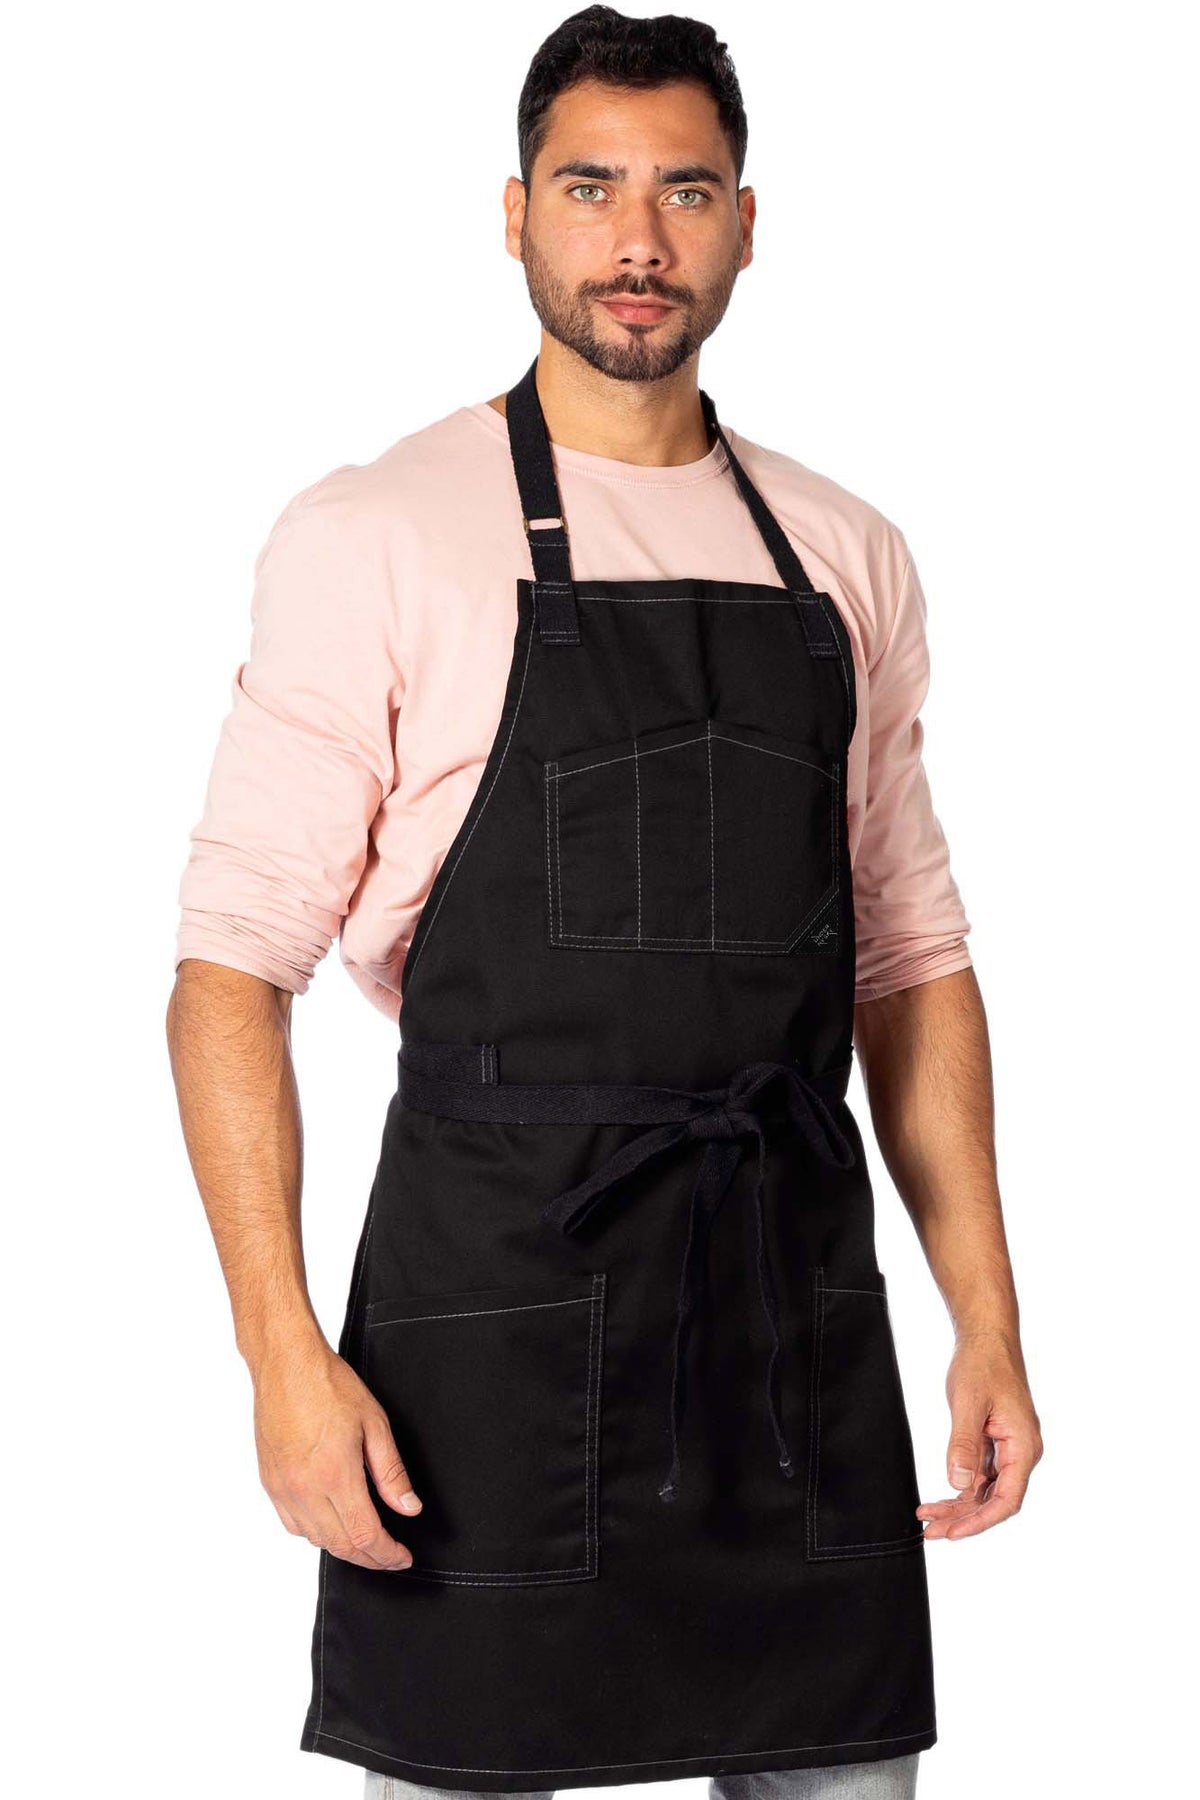 Chef Apron – Denim or Twill - Cotton Straps - Smart Pockets - Pro Chef, Cook, Barista, Bartender - Under NY Sky